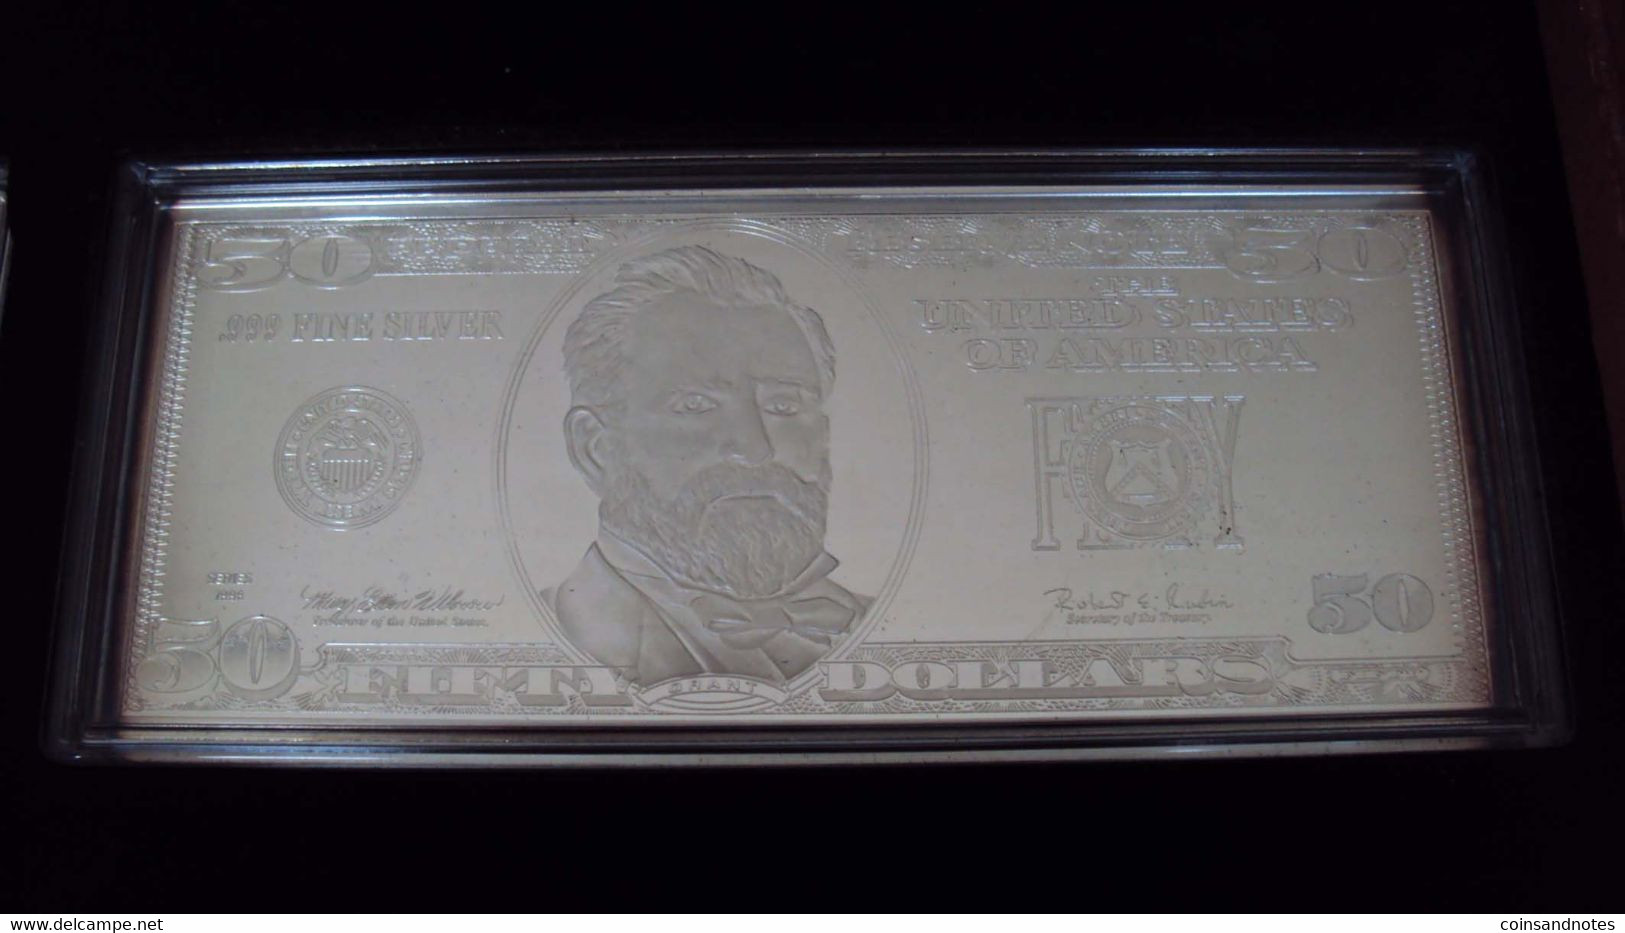 USA 1998 - The Washington Mint - Wooden Box 7 x 4 Troy Oz Silver Banknotes - Proof